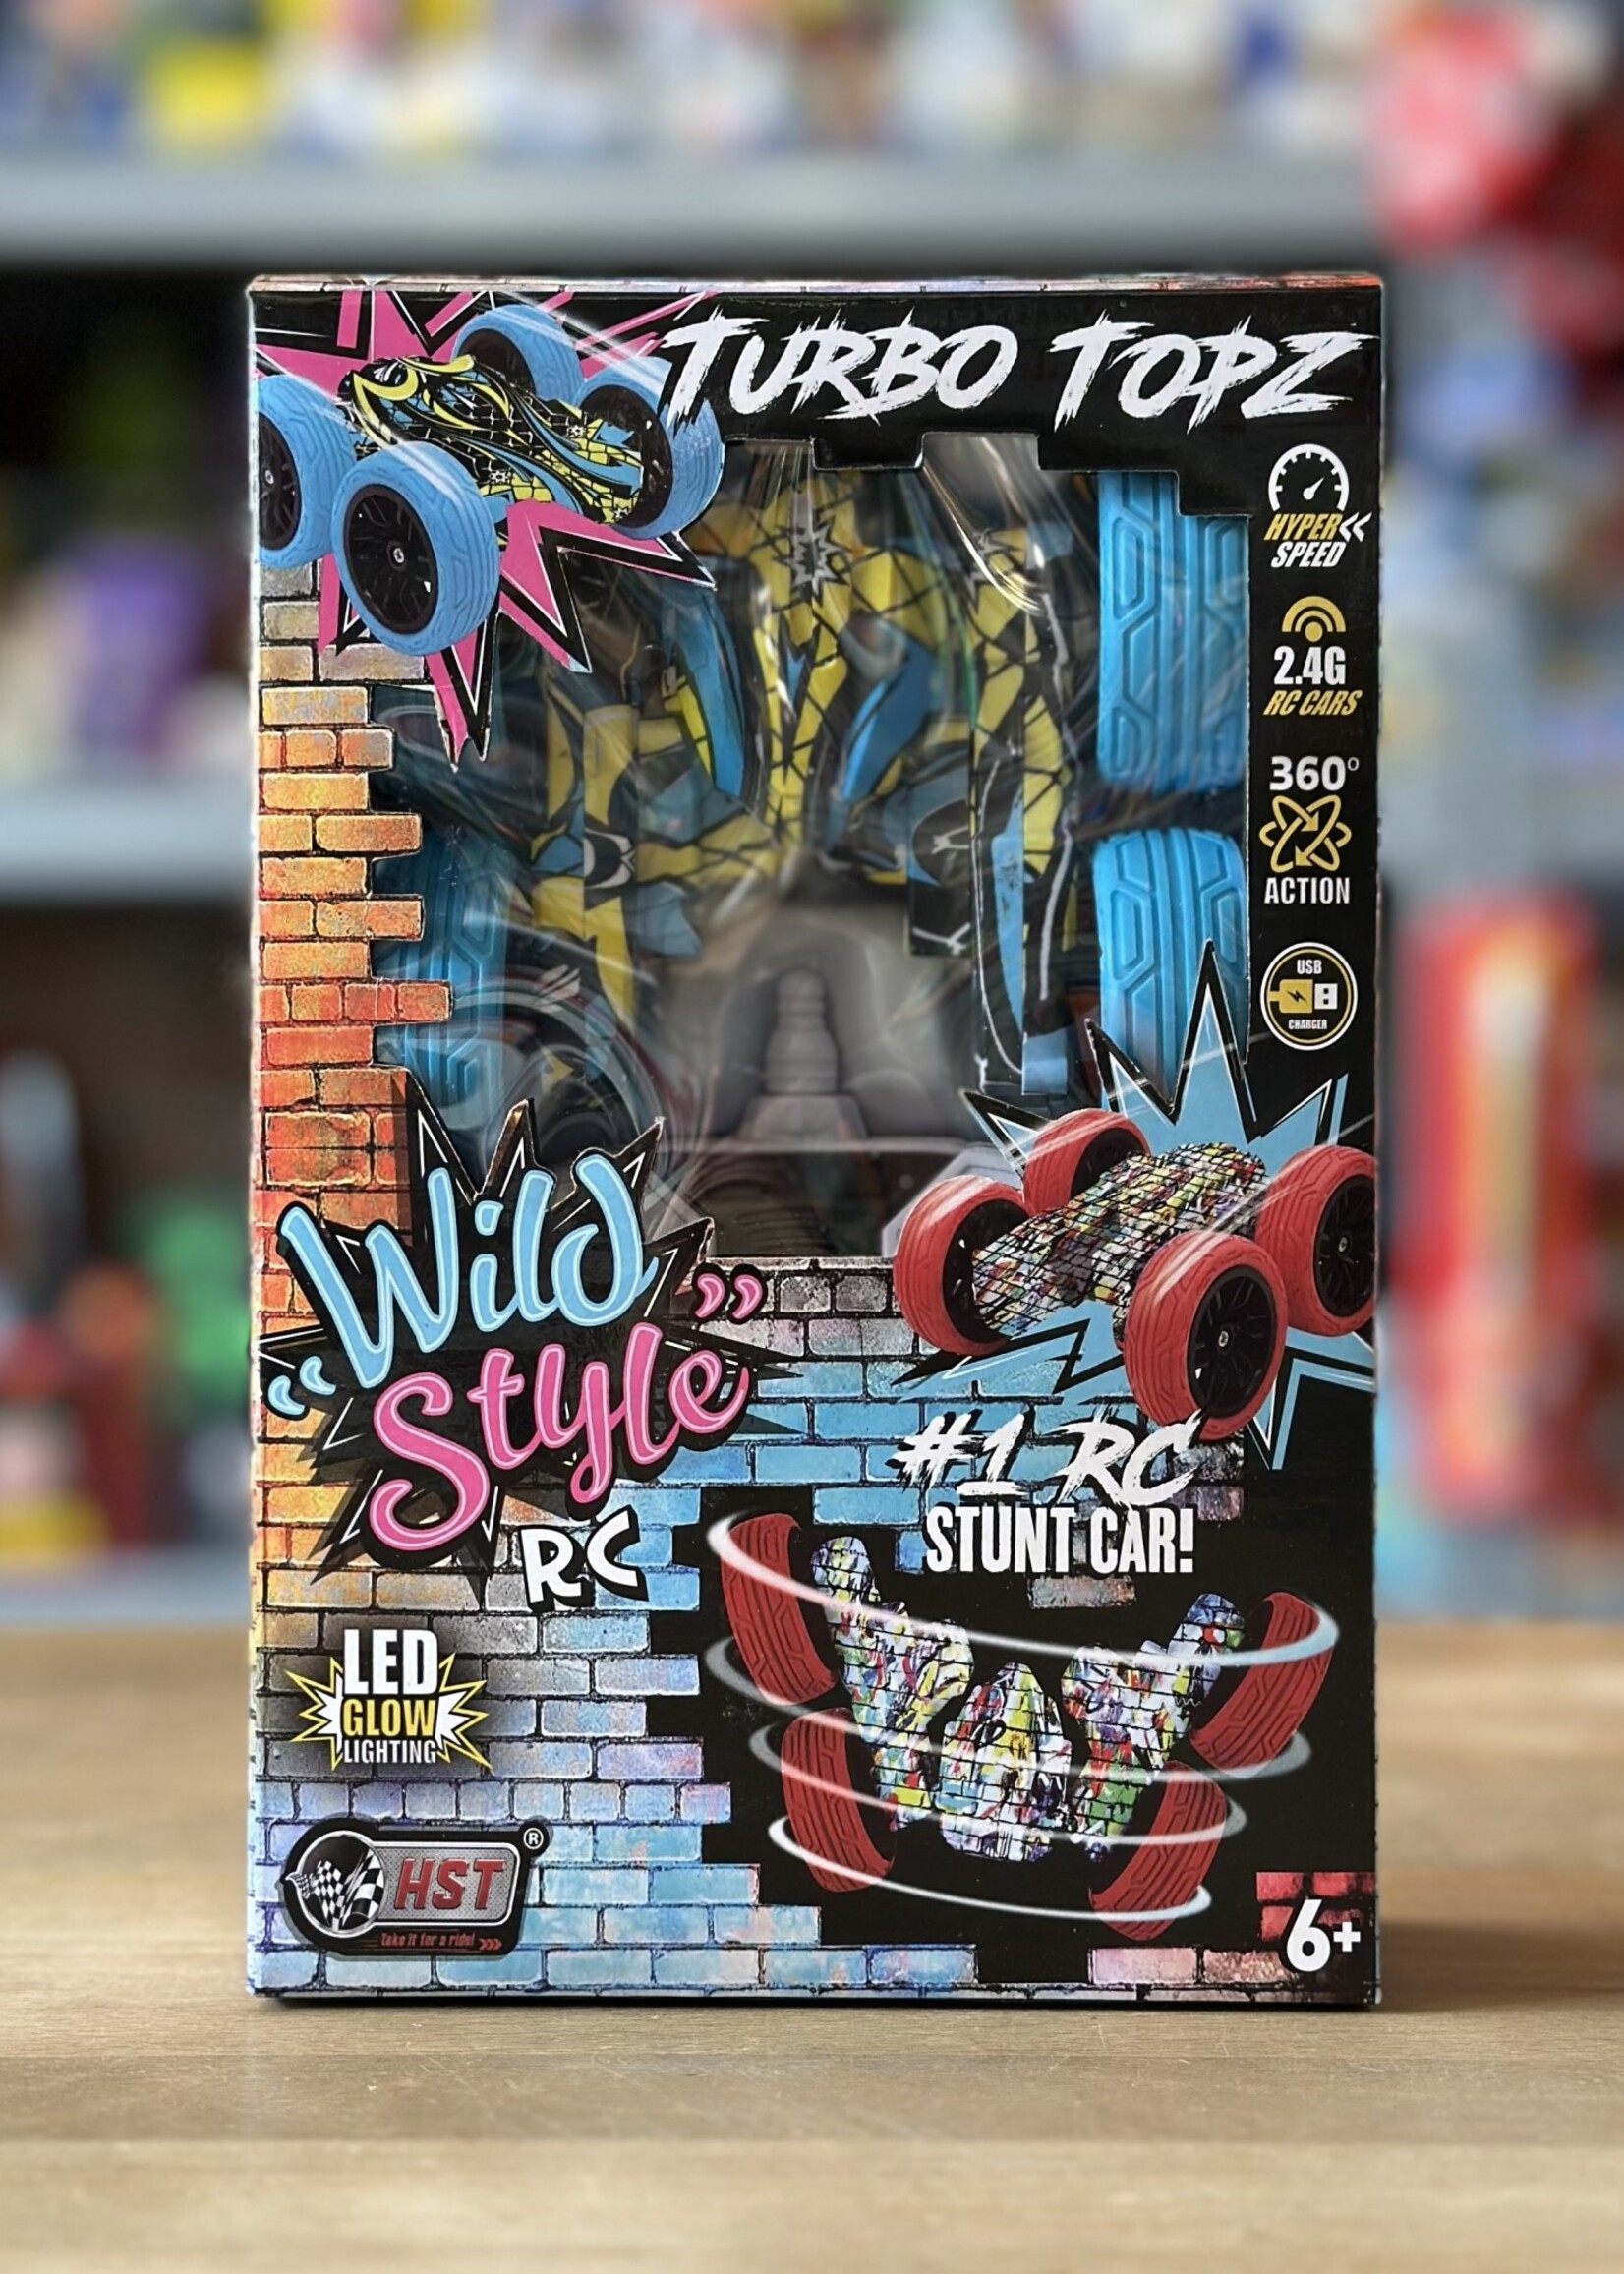 HST-US, LLC Wild Style RC - Turbo Topz